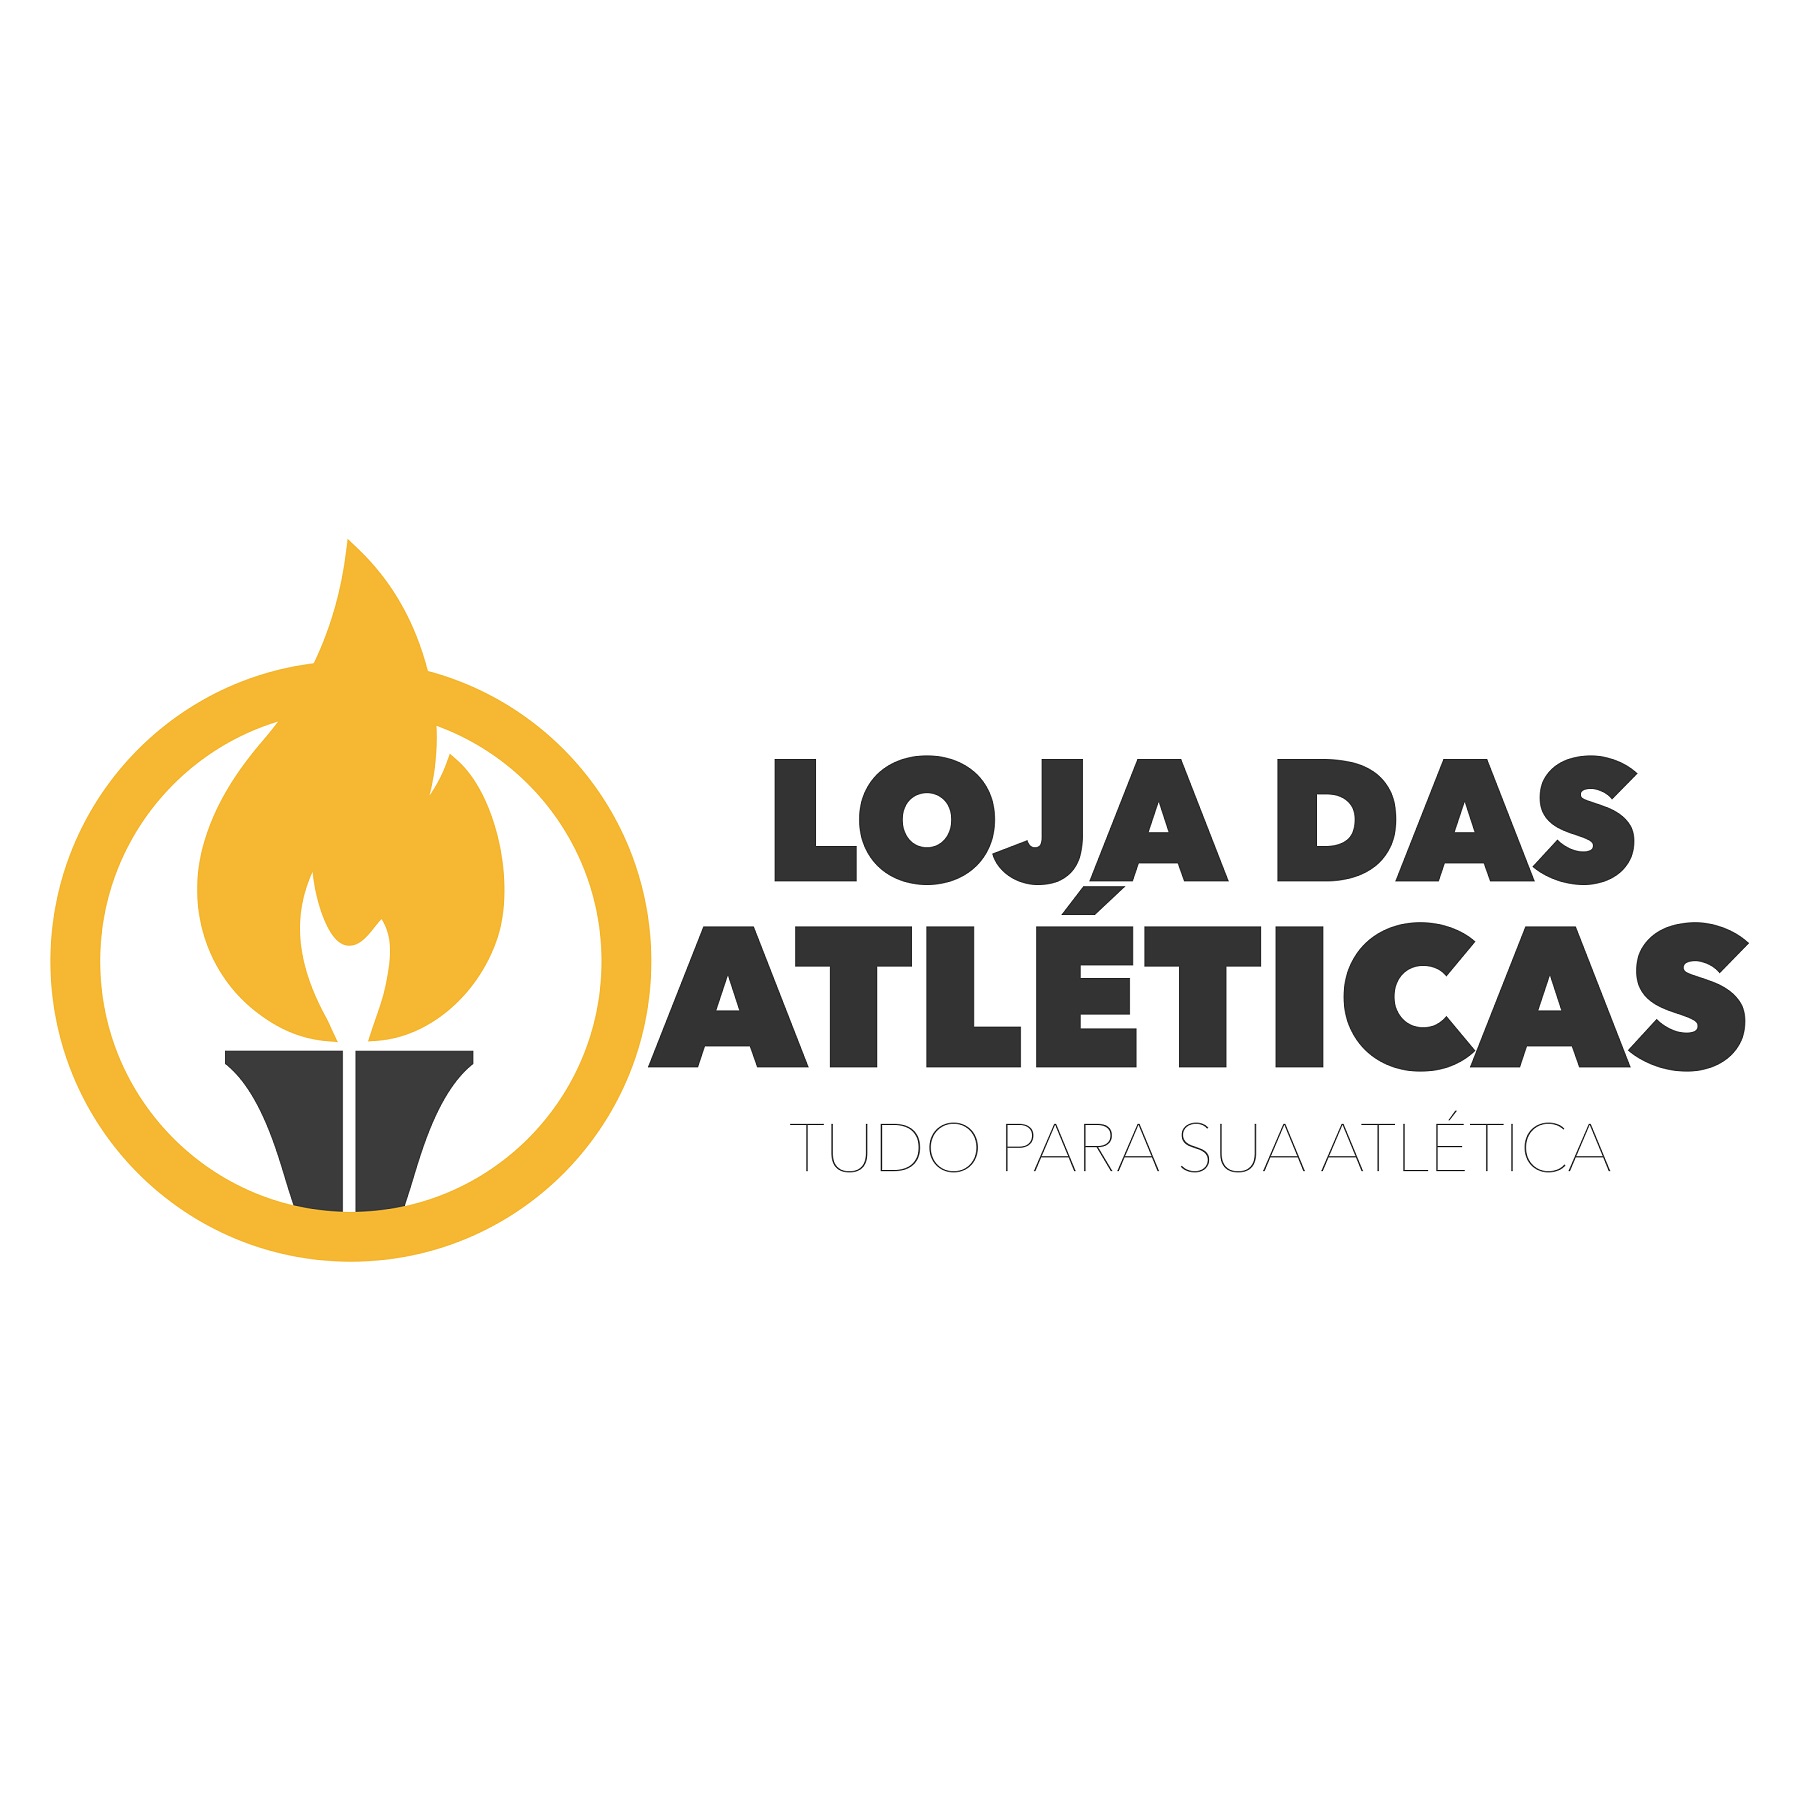 logo Atlética copy copy